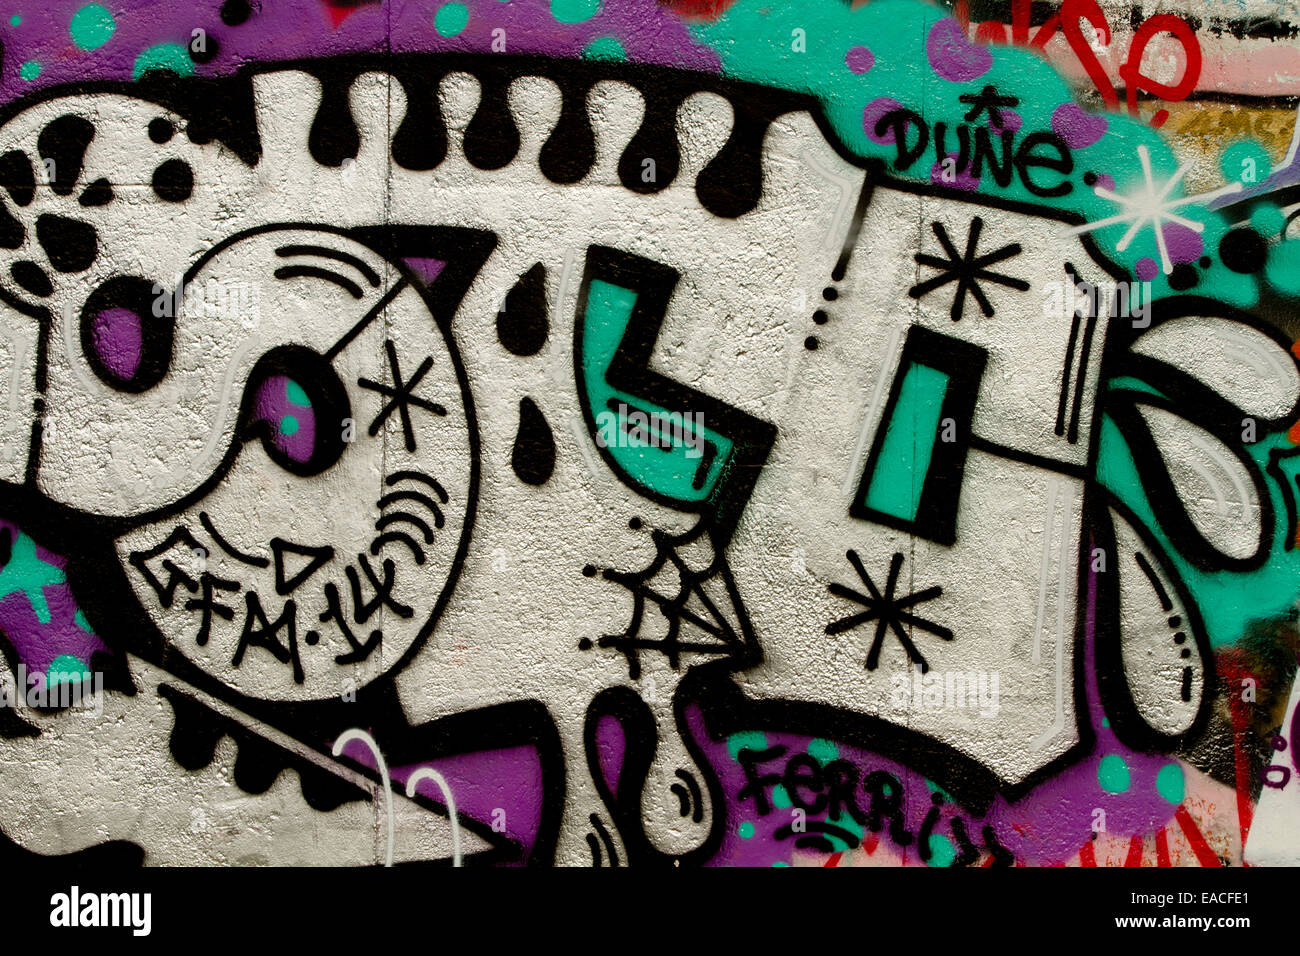 Graffiti street art Berlin wall tags cartoon letters Stock Photo